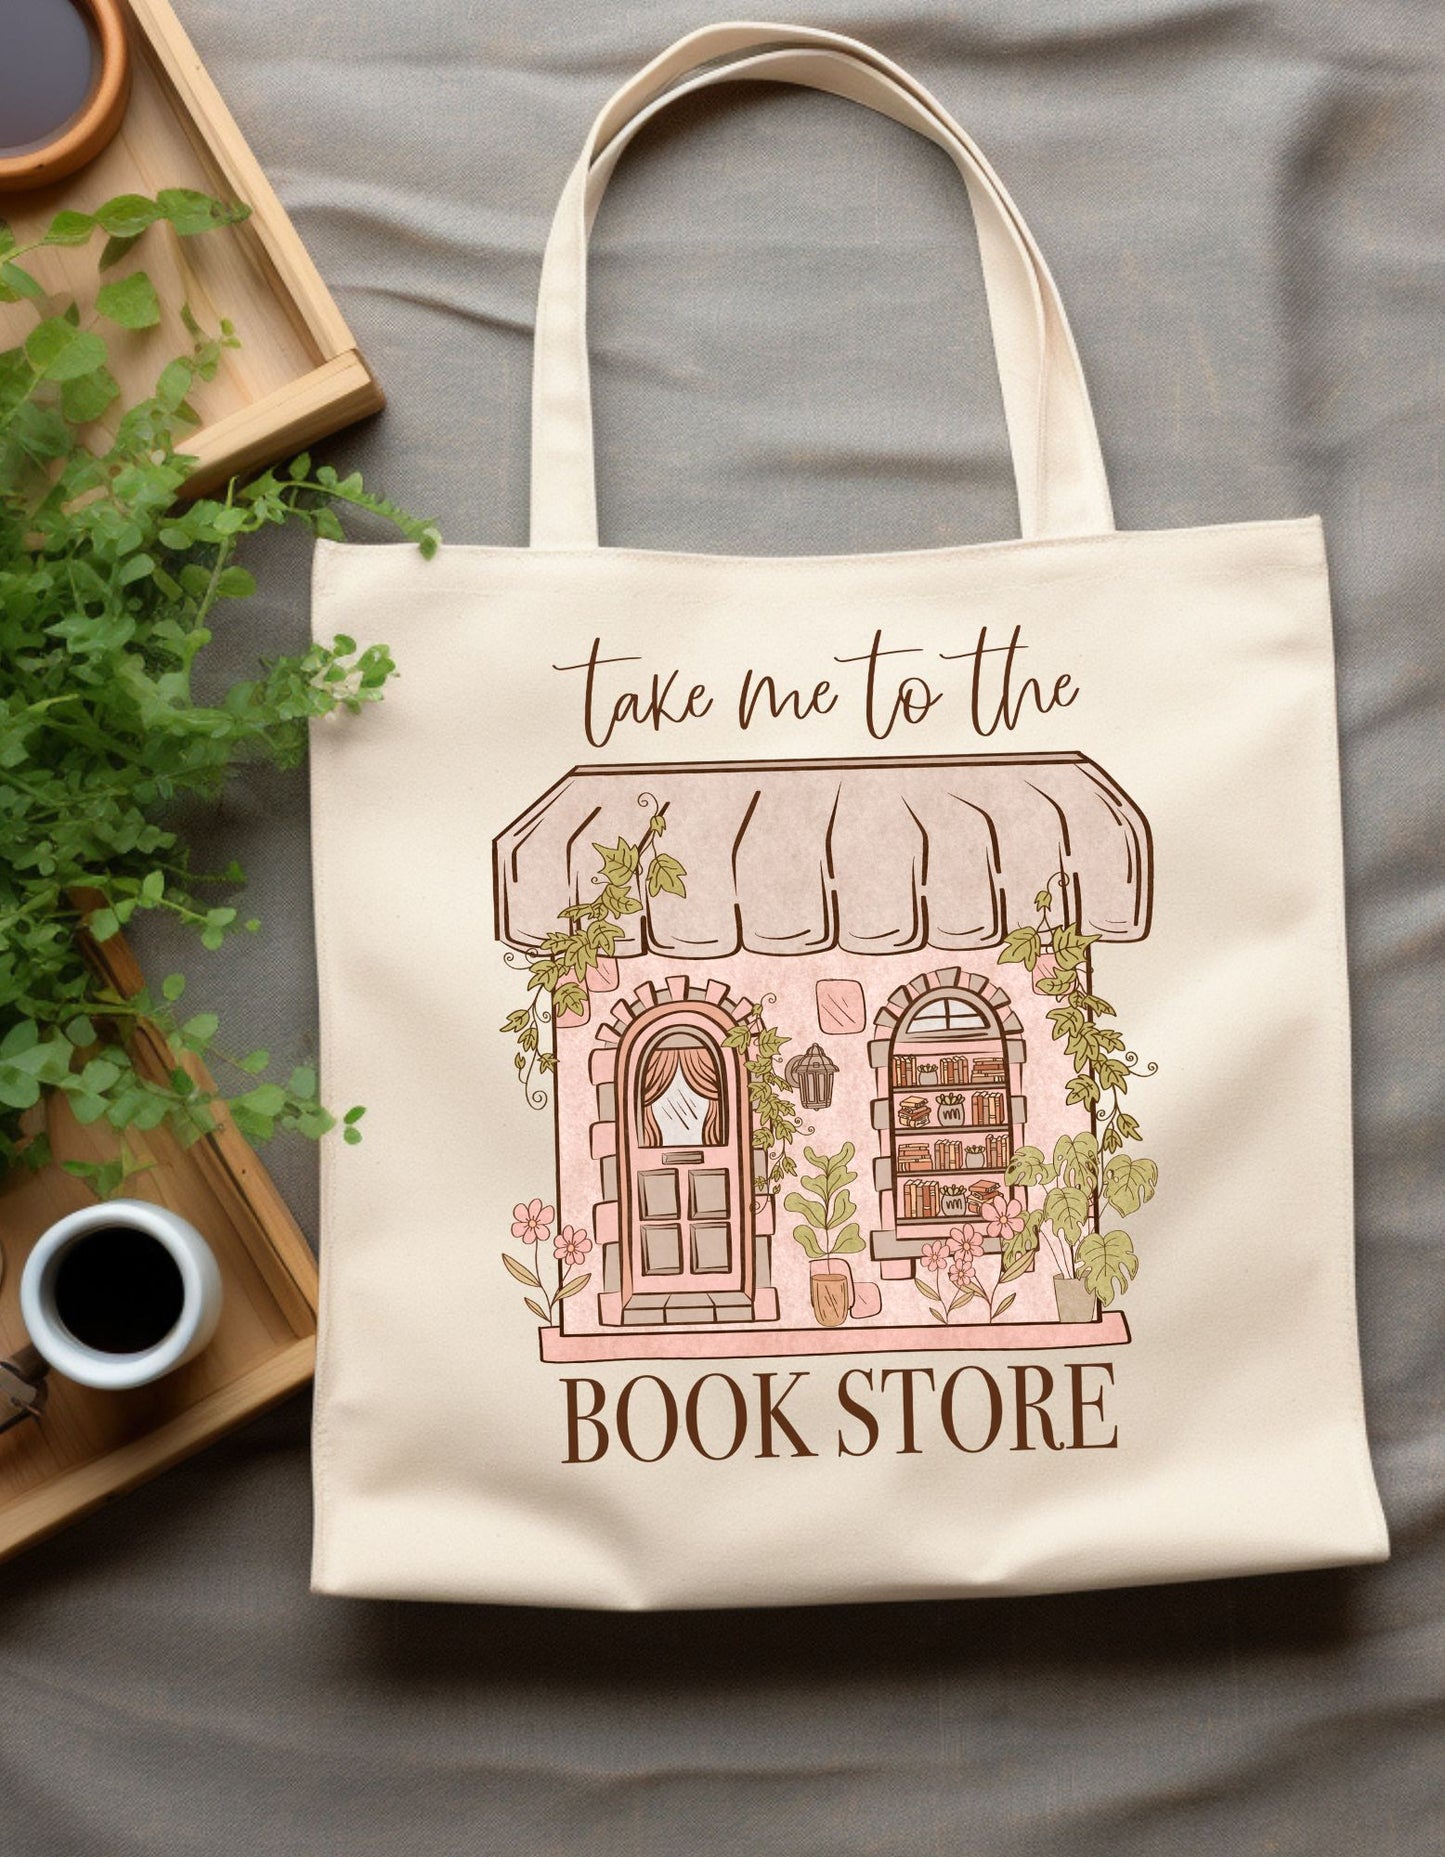 Take me to the Bookstore Book Tote